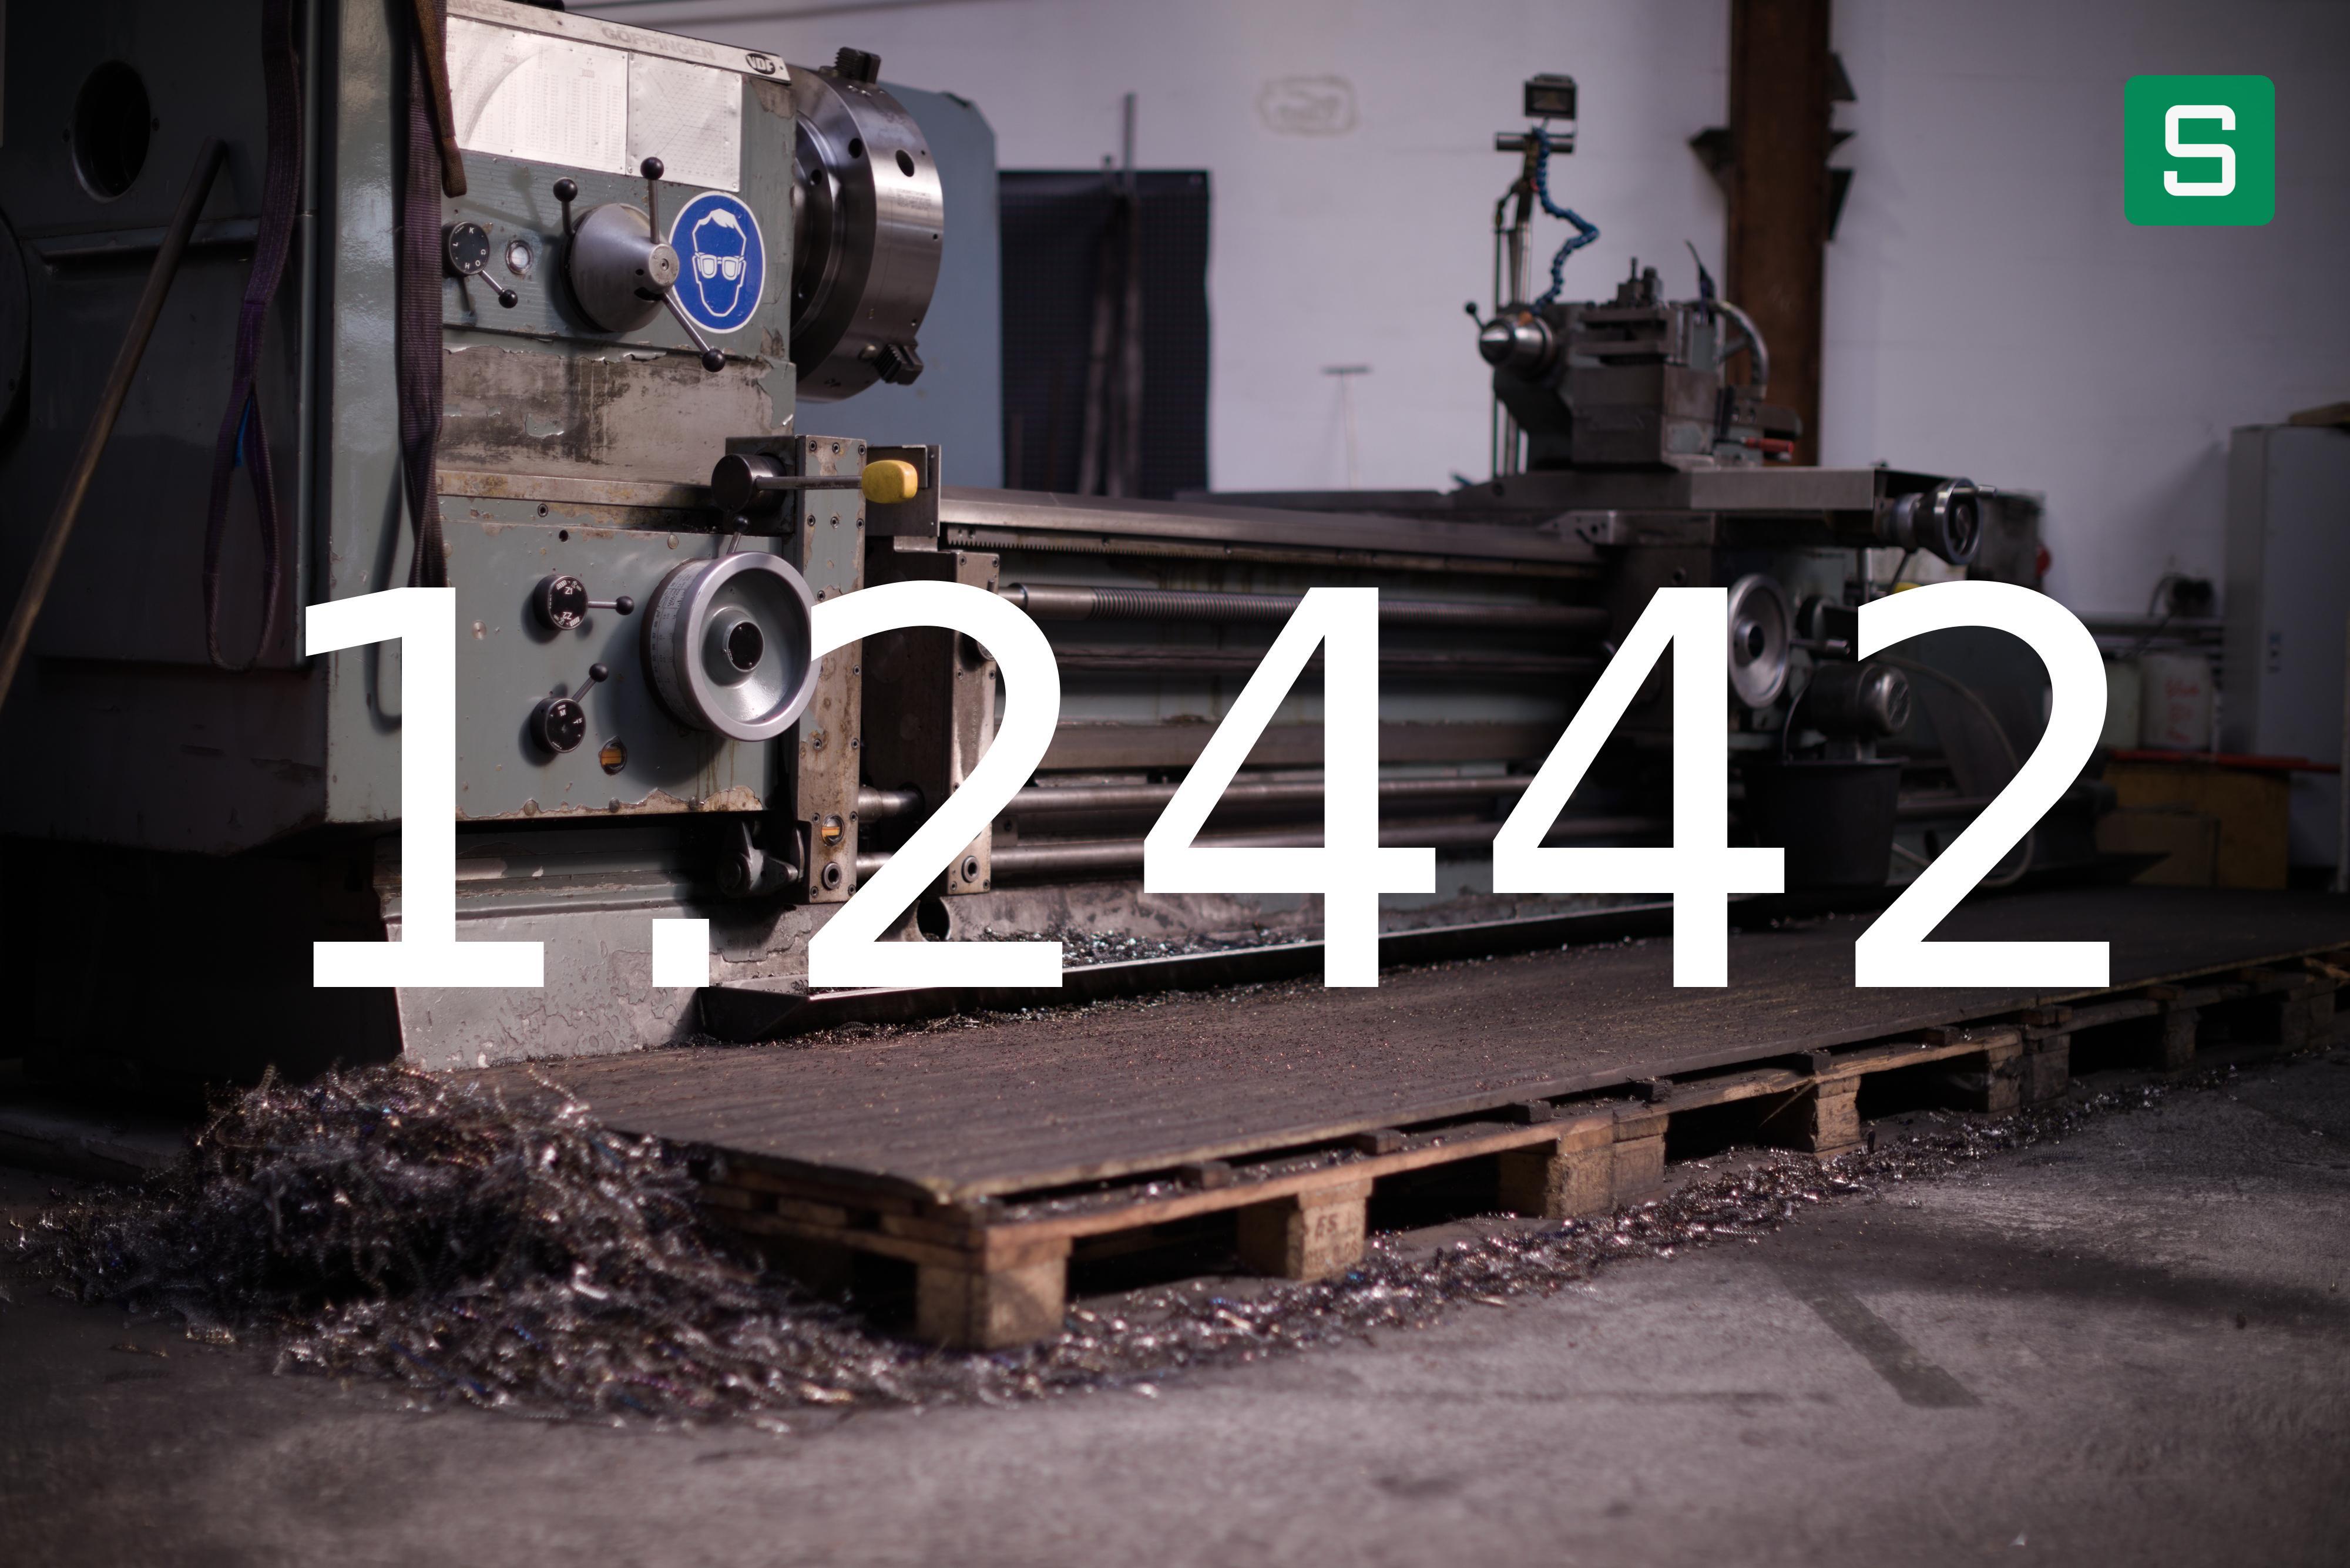 Steel Material: 1.2442